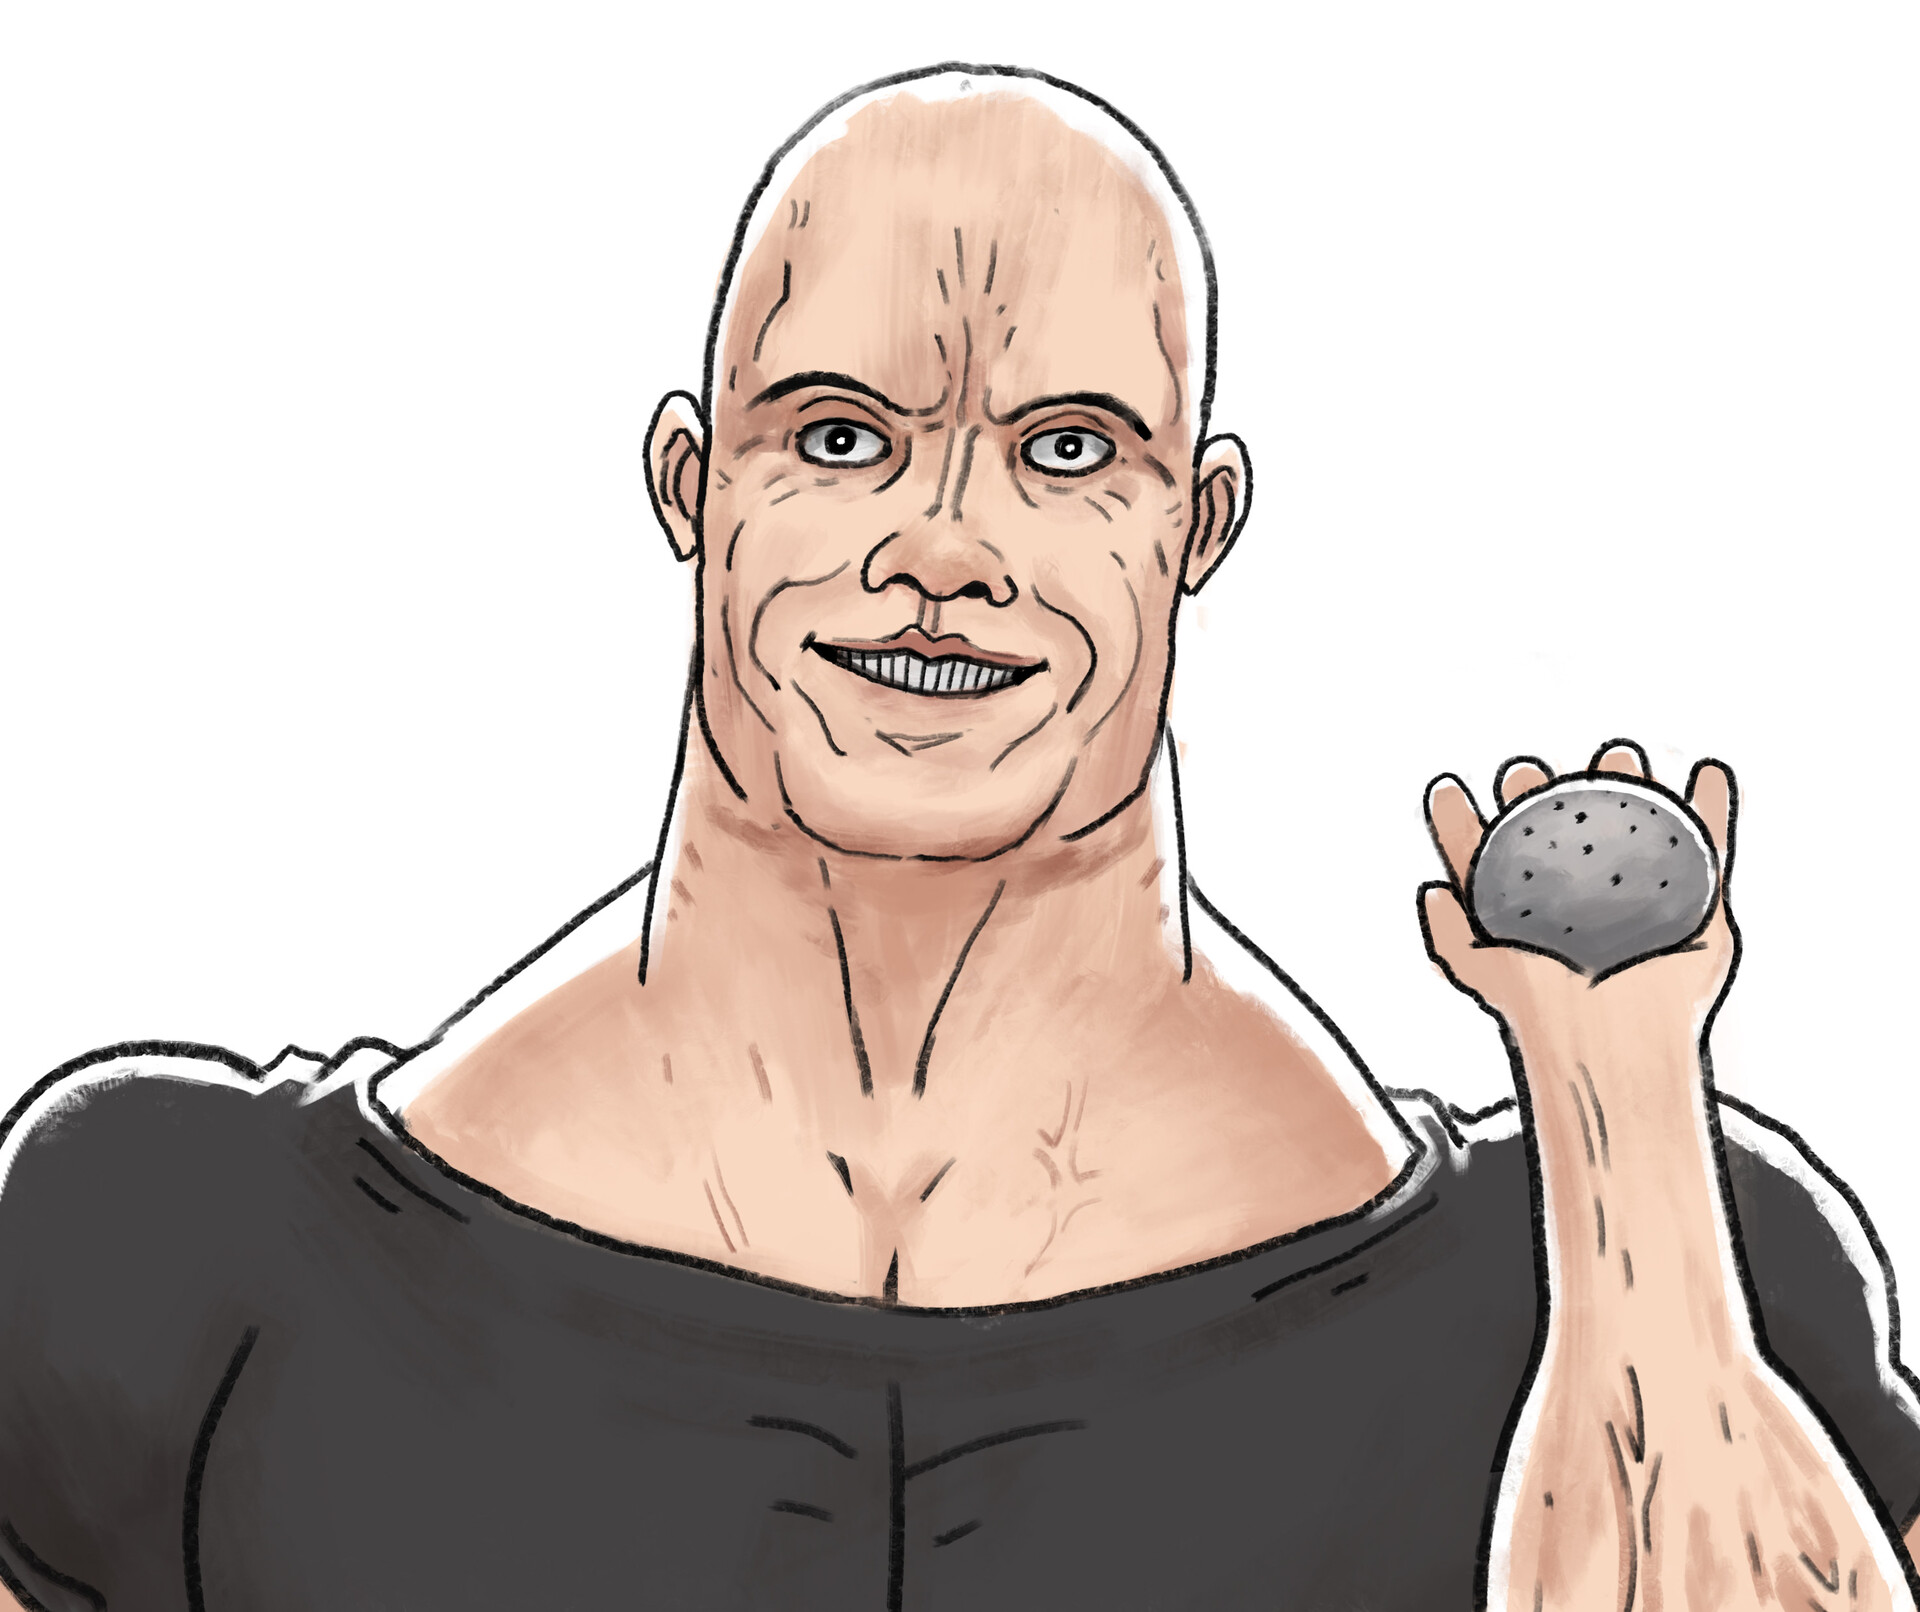 My New Digital Drawing Of Dwayne Johnson (The Rock)